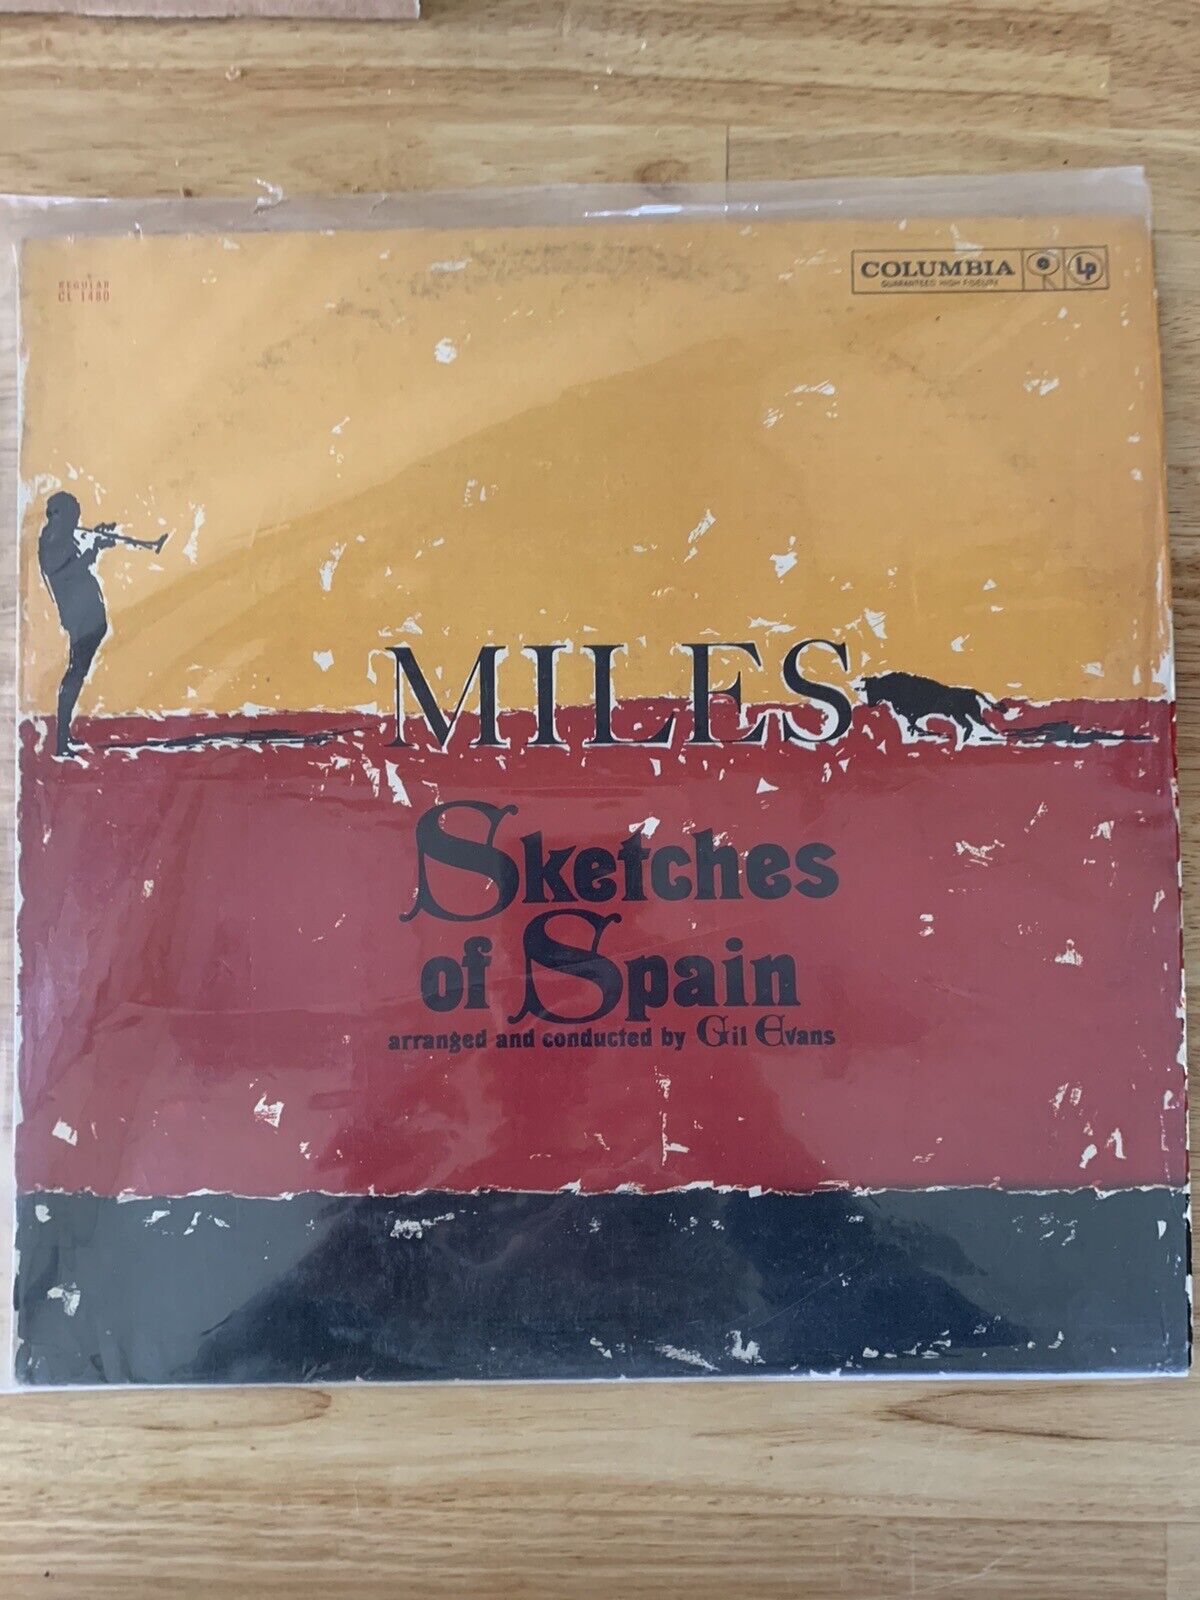 Miles Davis Sketches of Spain 1960 Columbia CL1480 MONO Six Eye Label